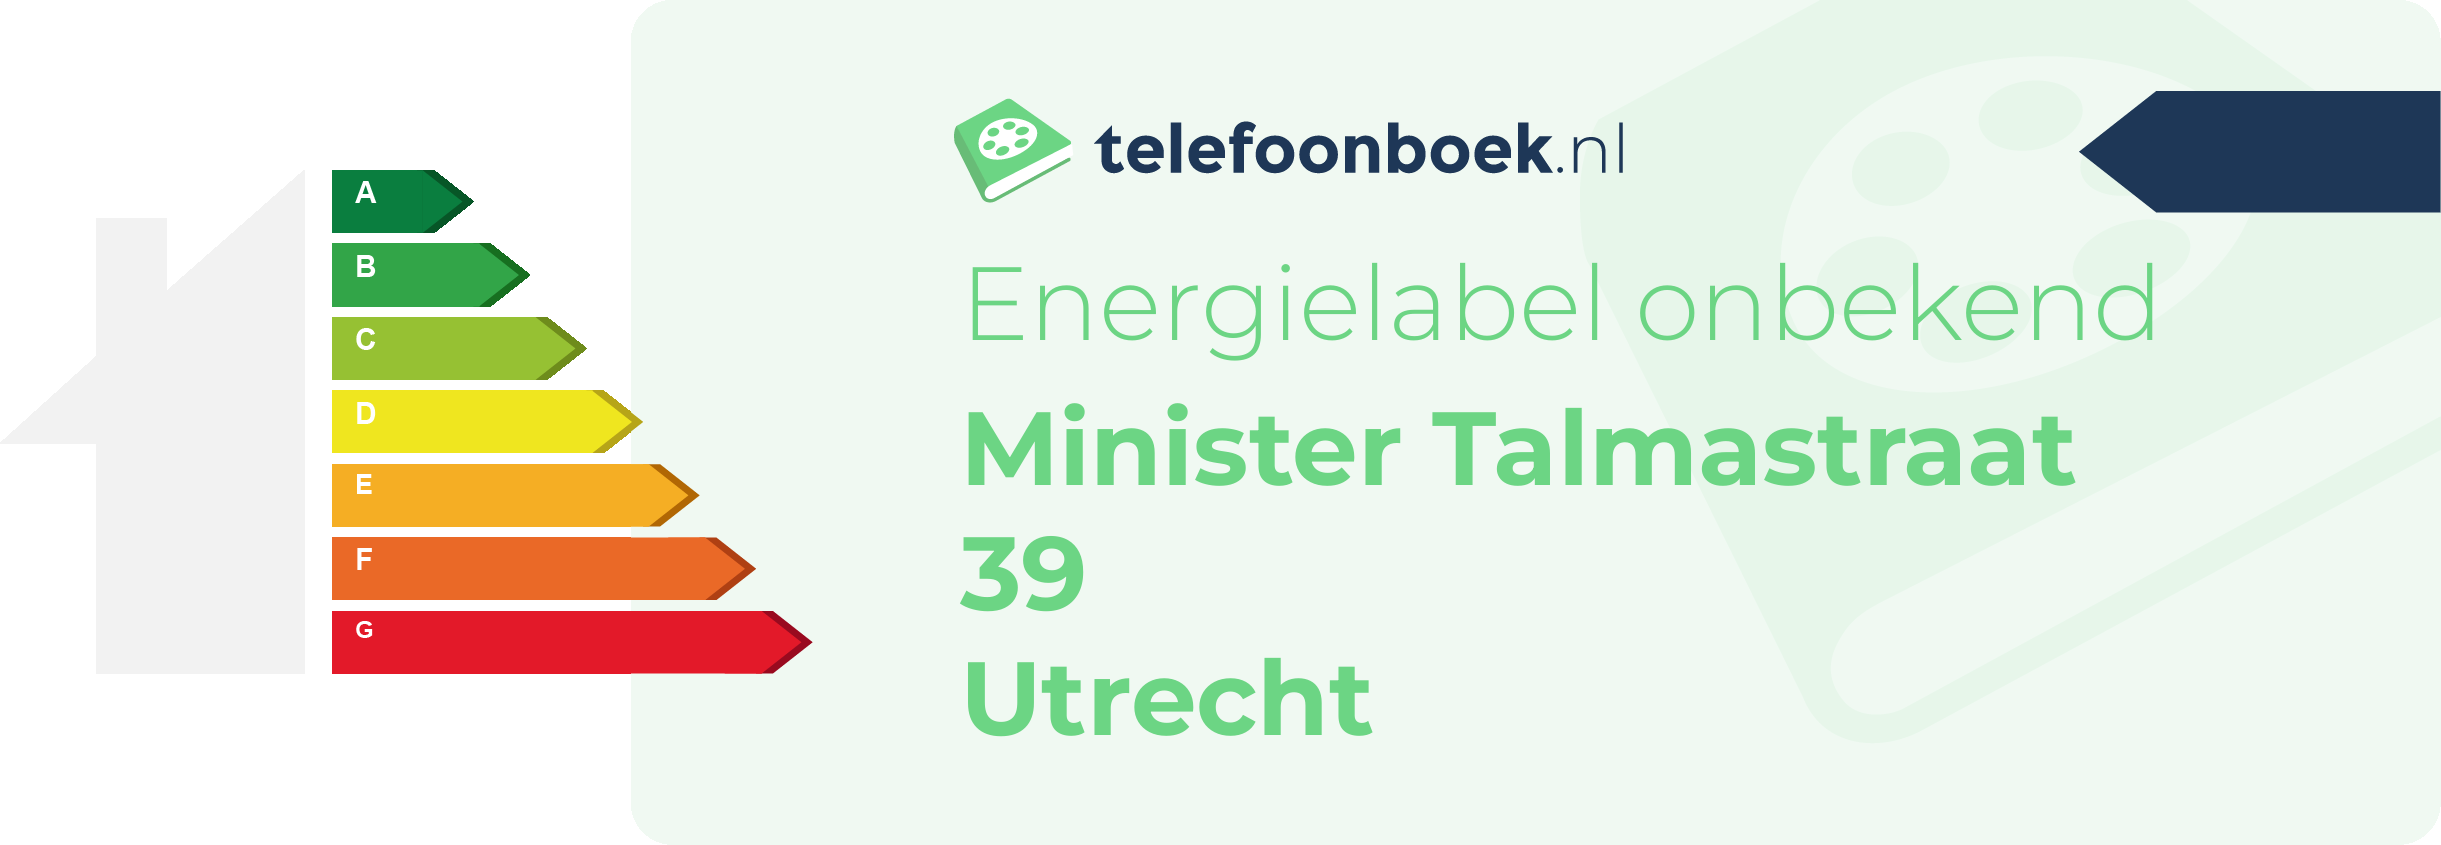 Energielabel Minister Talmastraat 39 Utrecht